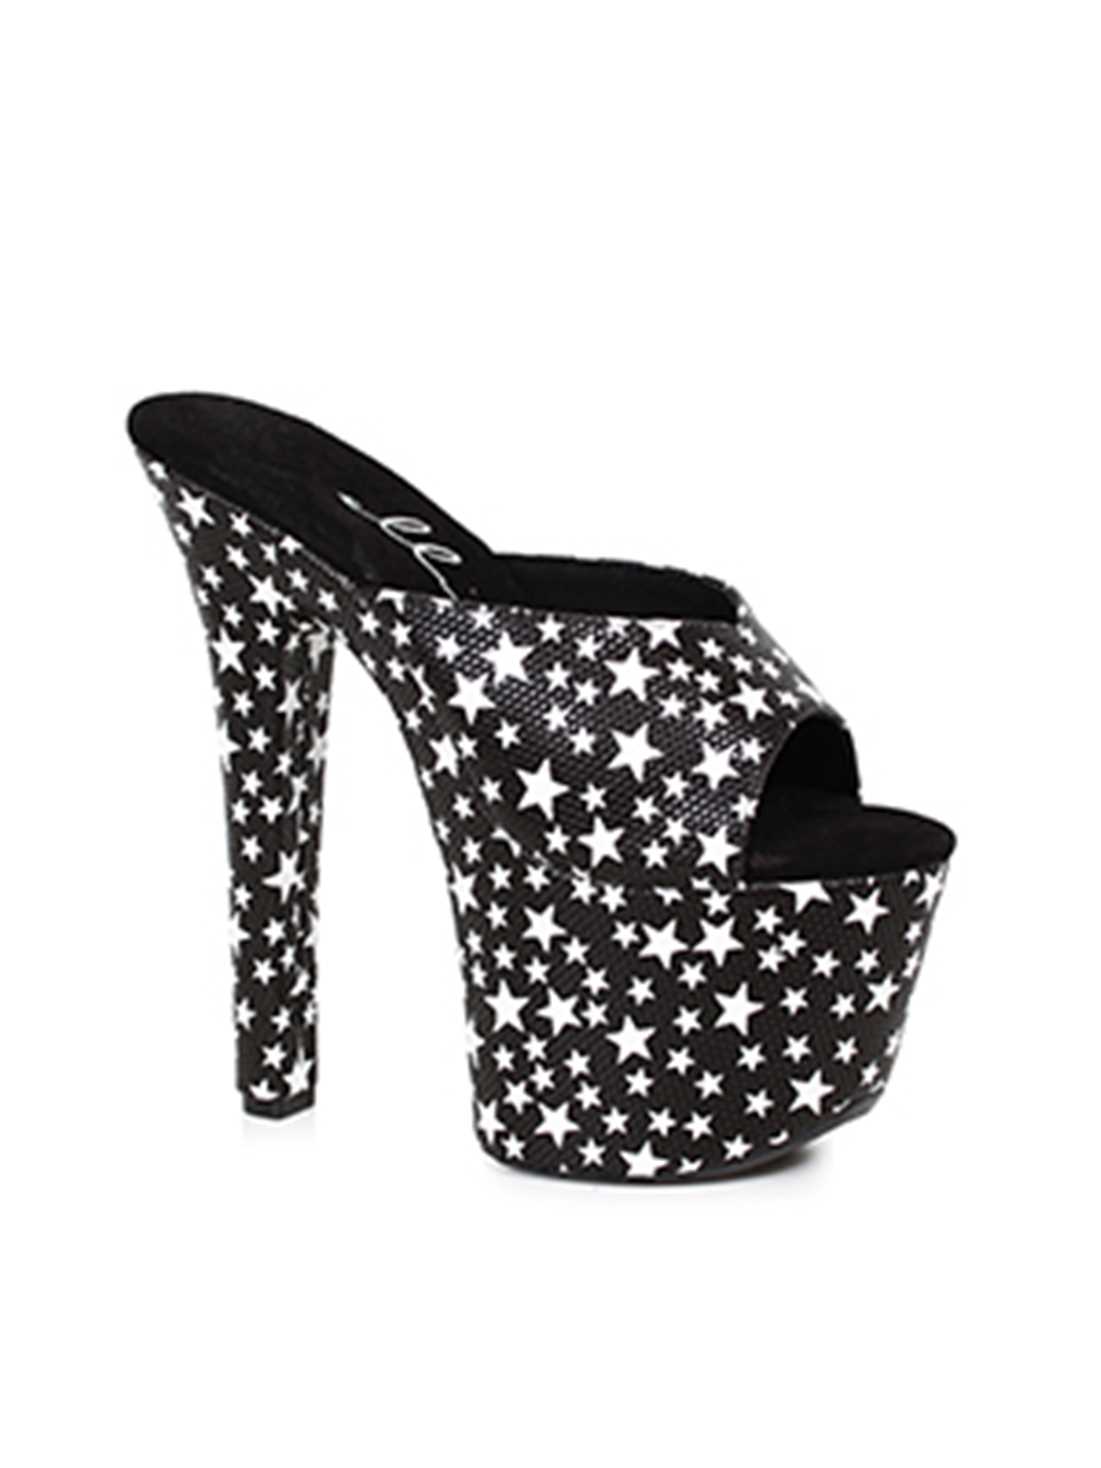 ELLIE 711-GAZE Women's 7" Heel Mule Slide Platform Sandals With Star Print - image 2 of 2